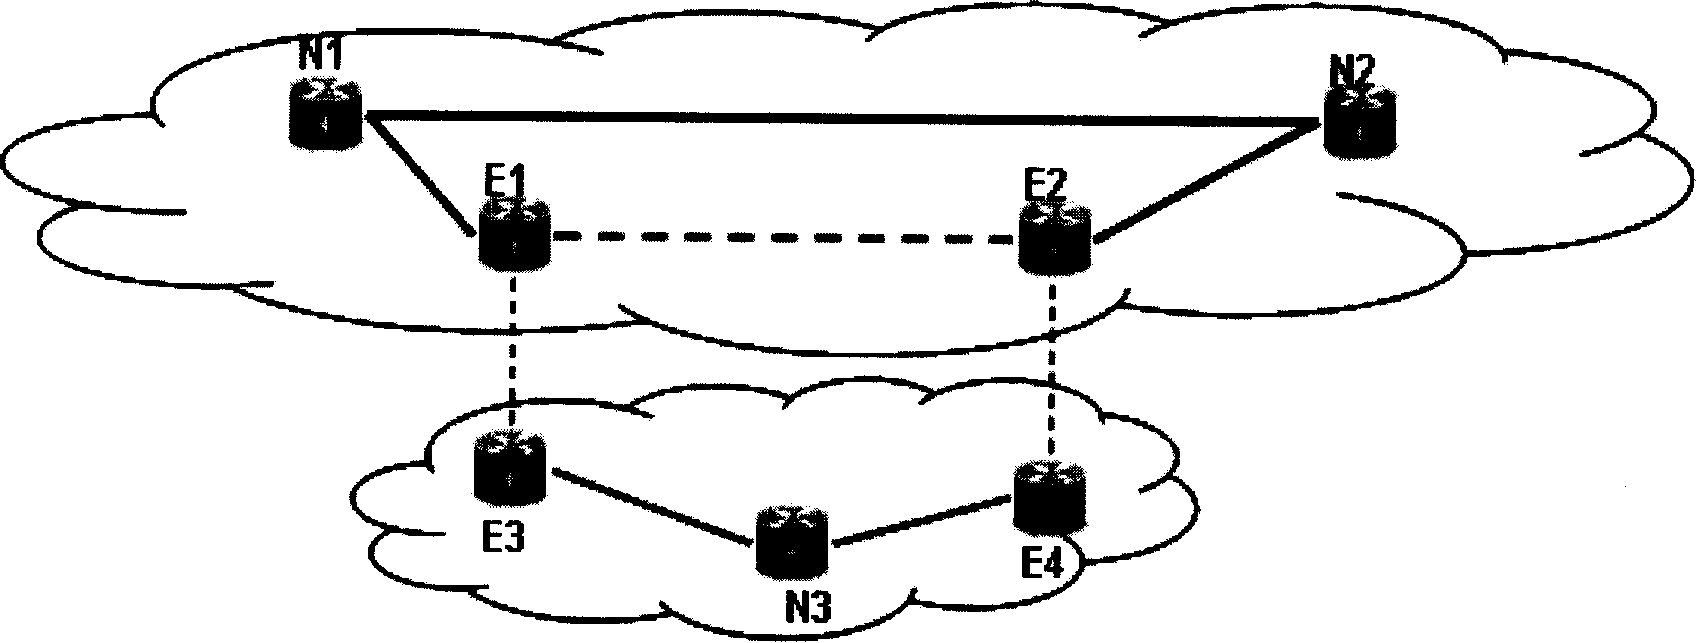 Service path calculating method